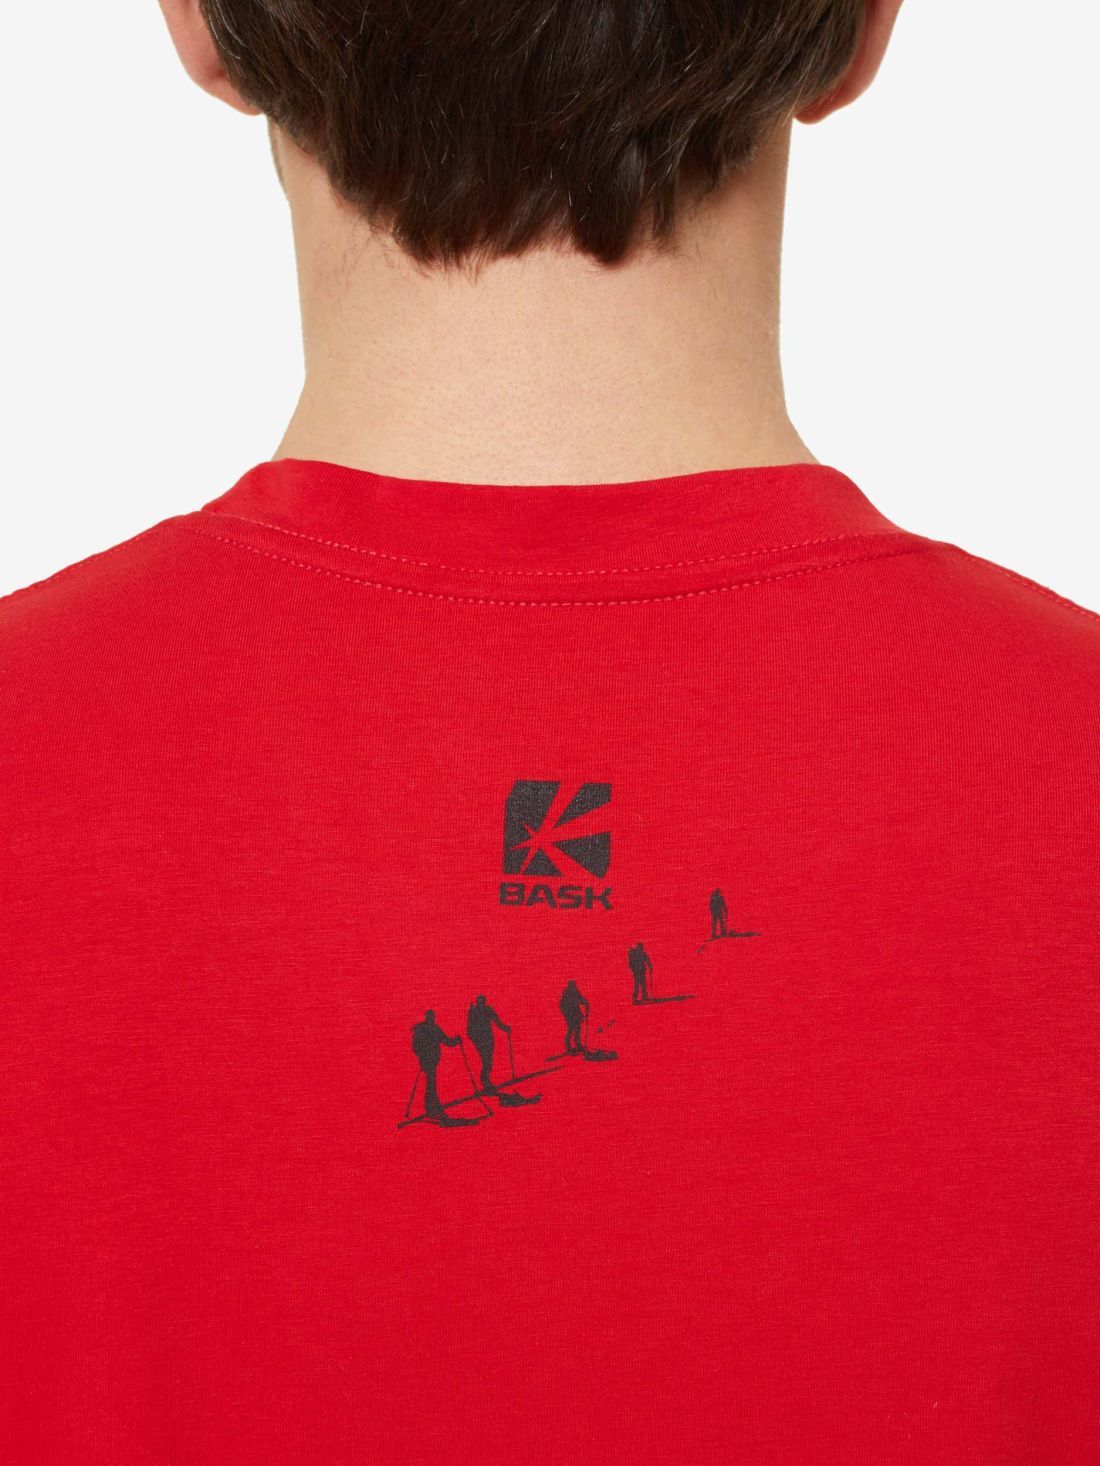 Bask Стильная футболка для мужчин Bask